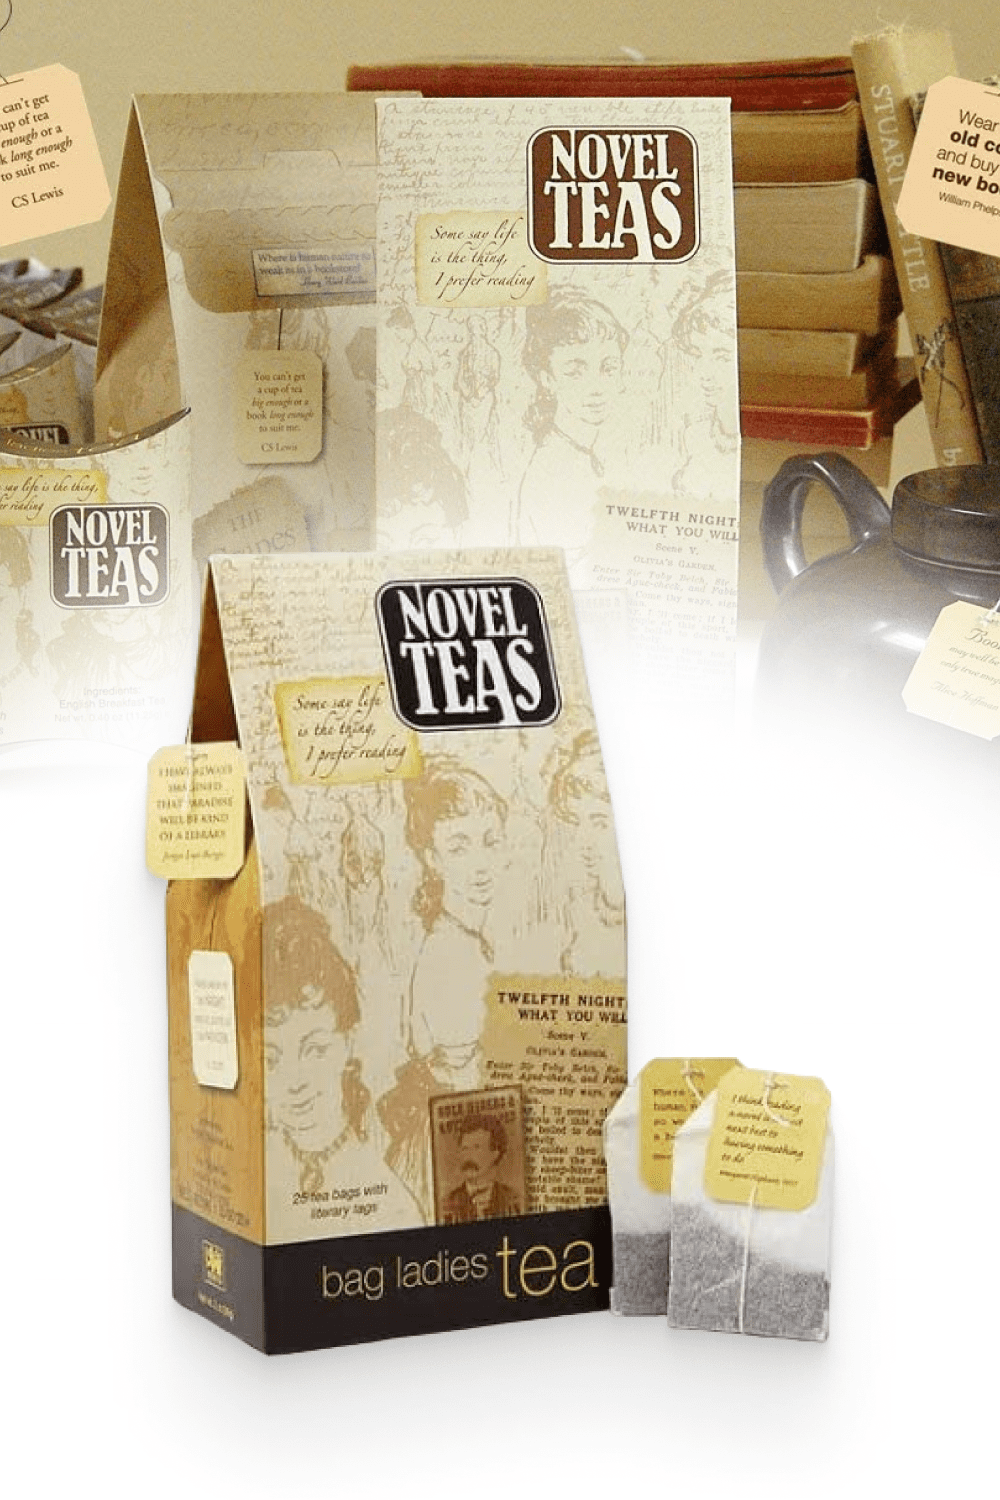 Image of the Novel Teas Tea package.